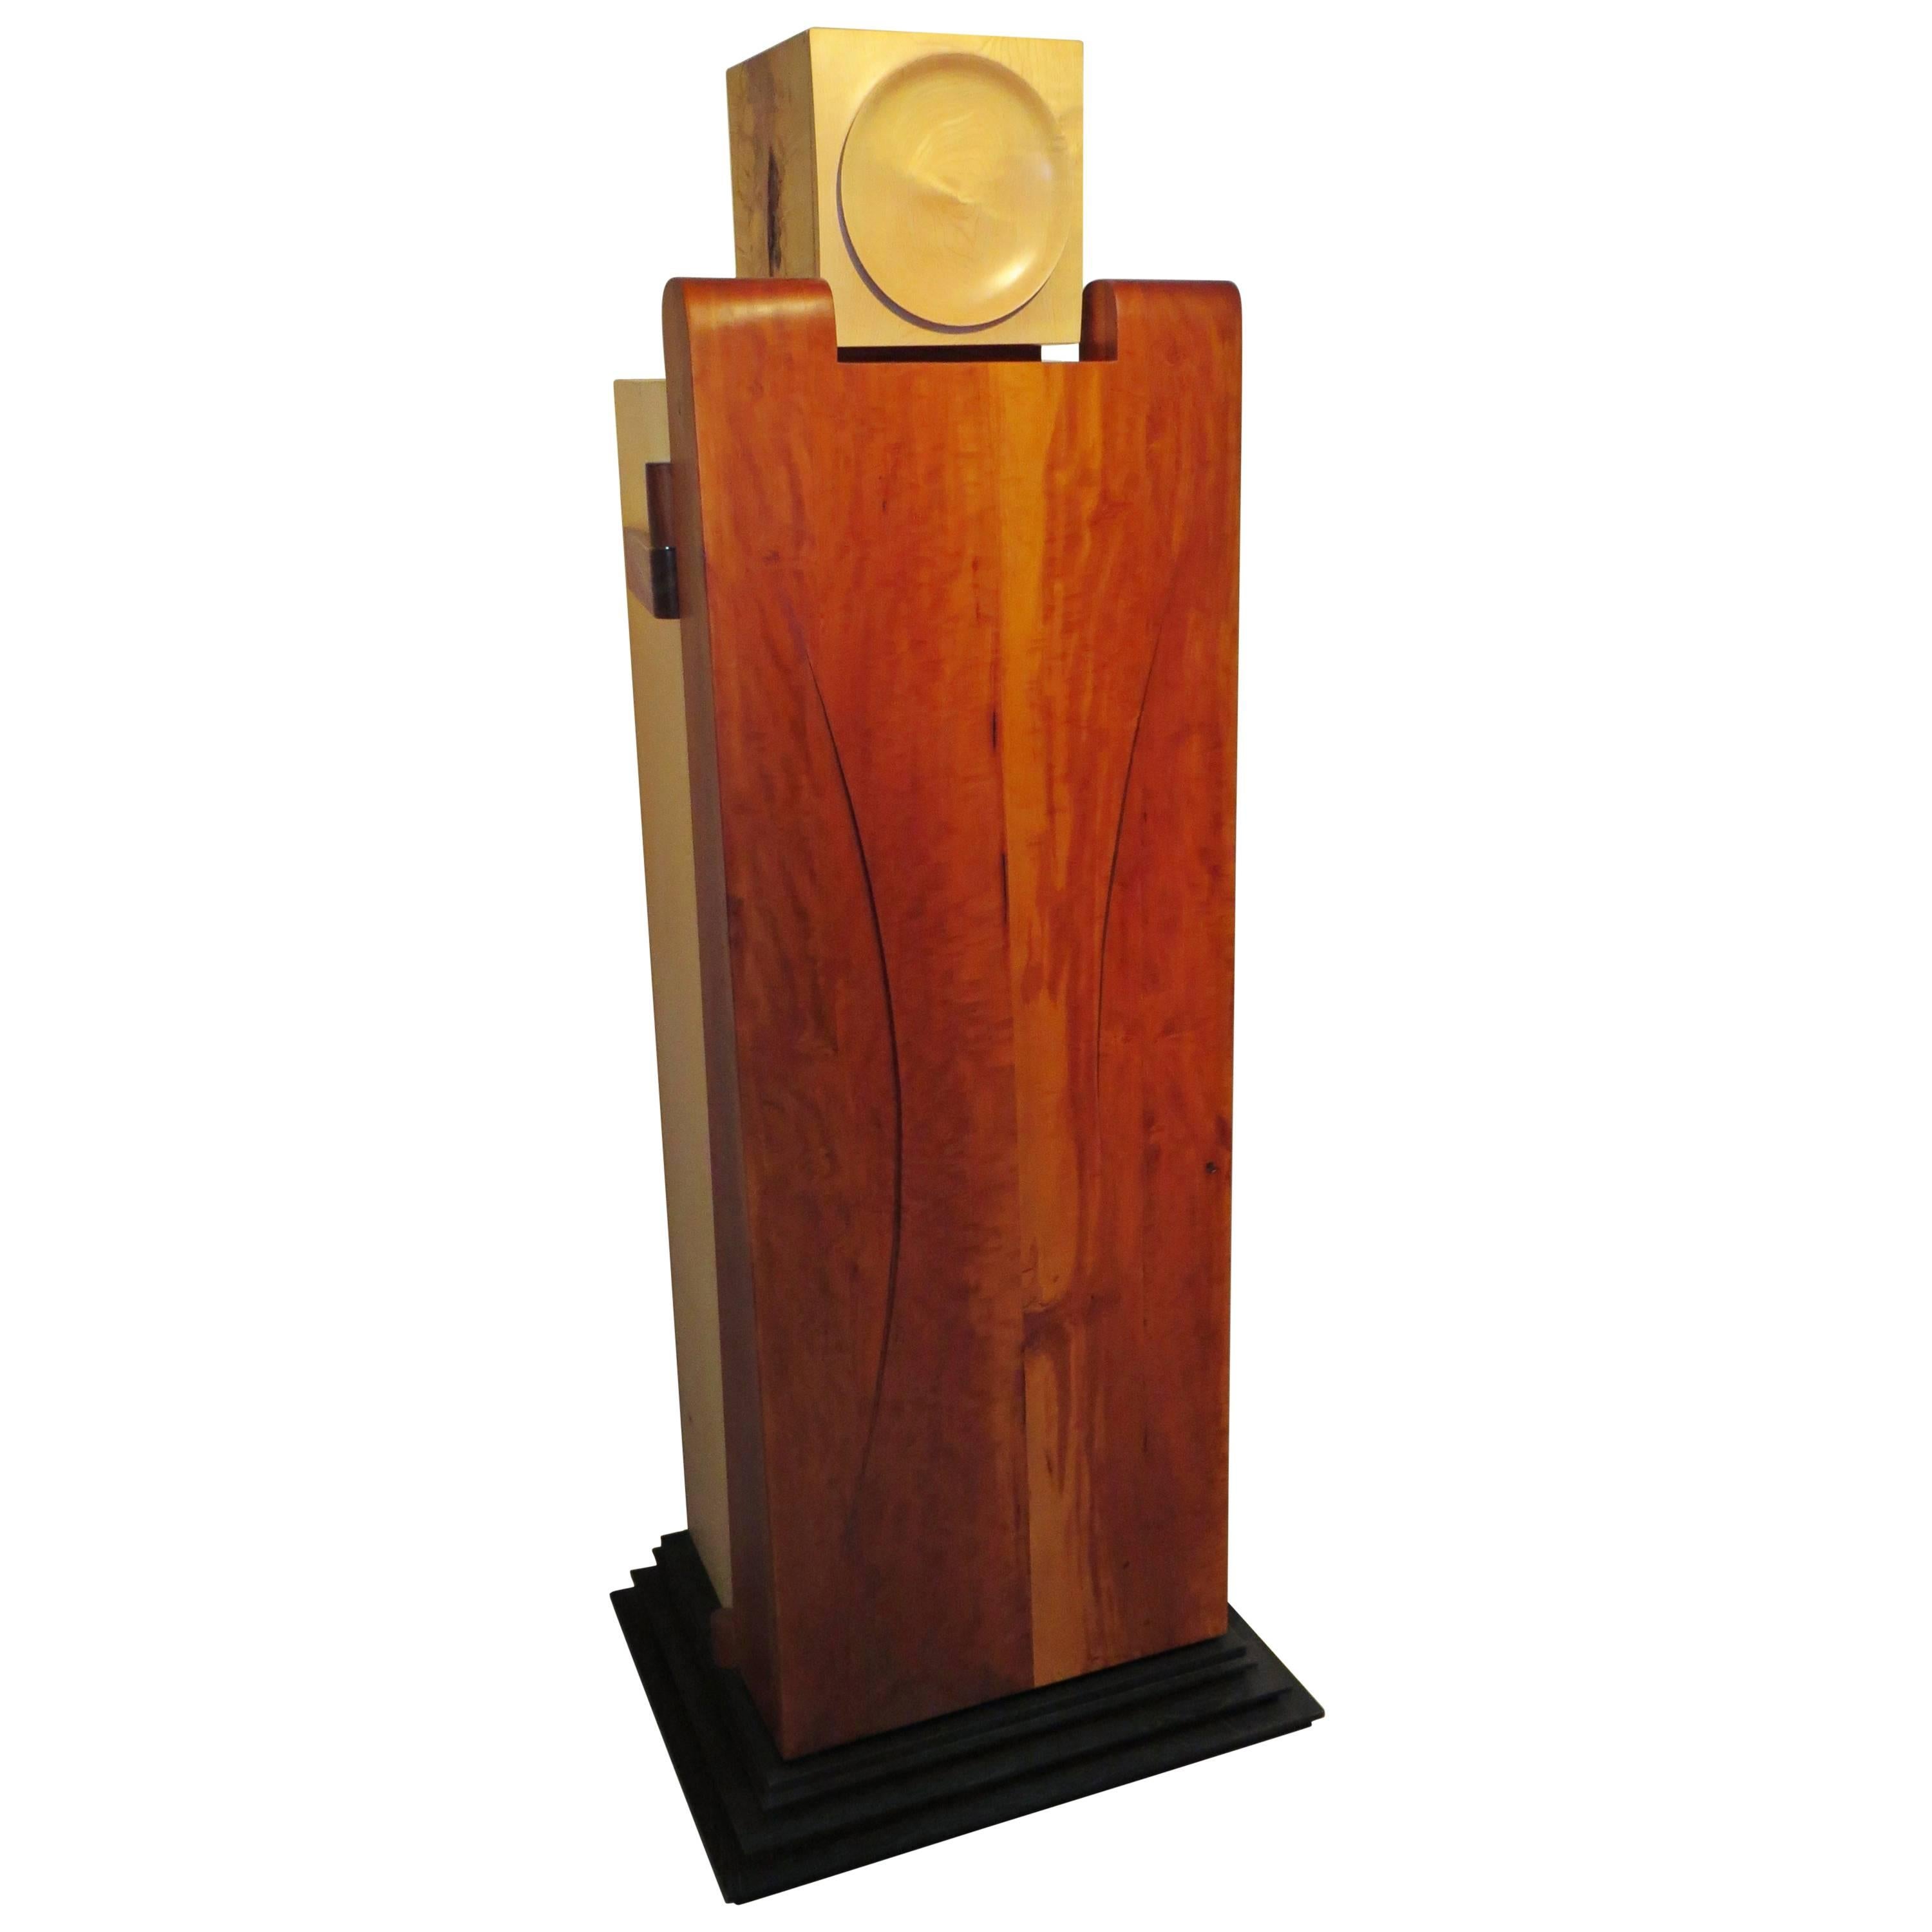 Furniture Sculpture "Cabinet-Man" Solid Wood, One of Kind